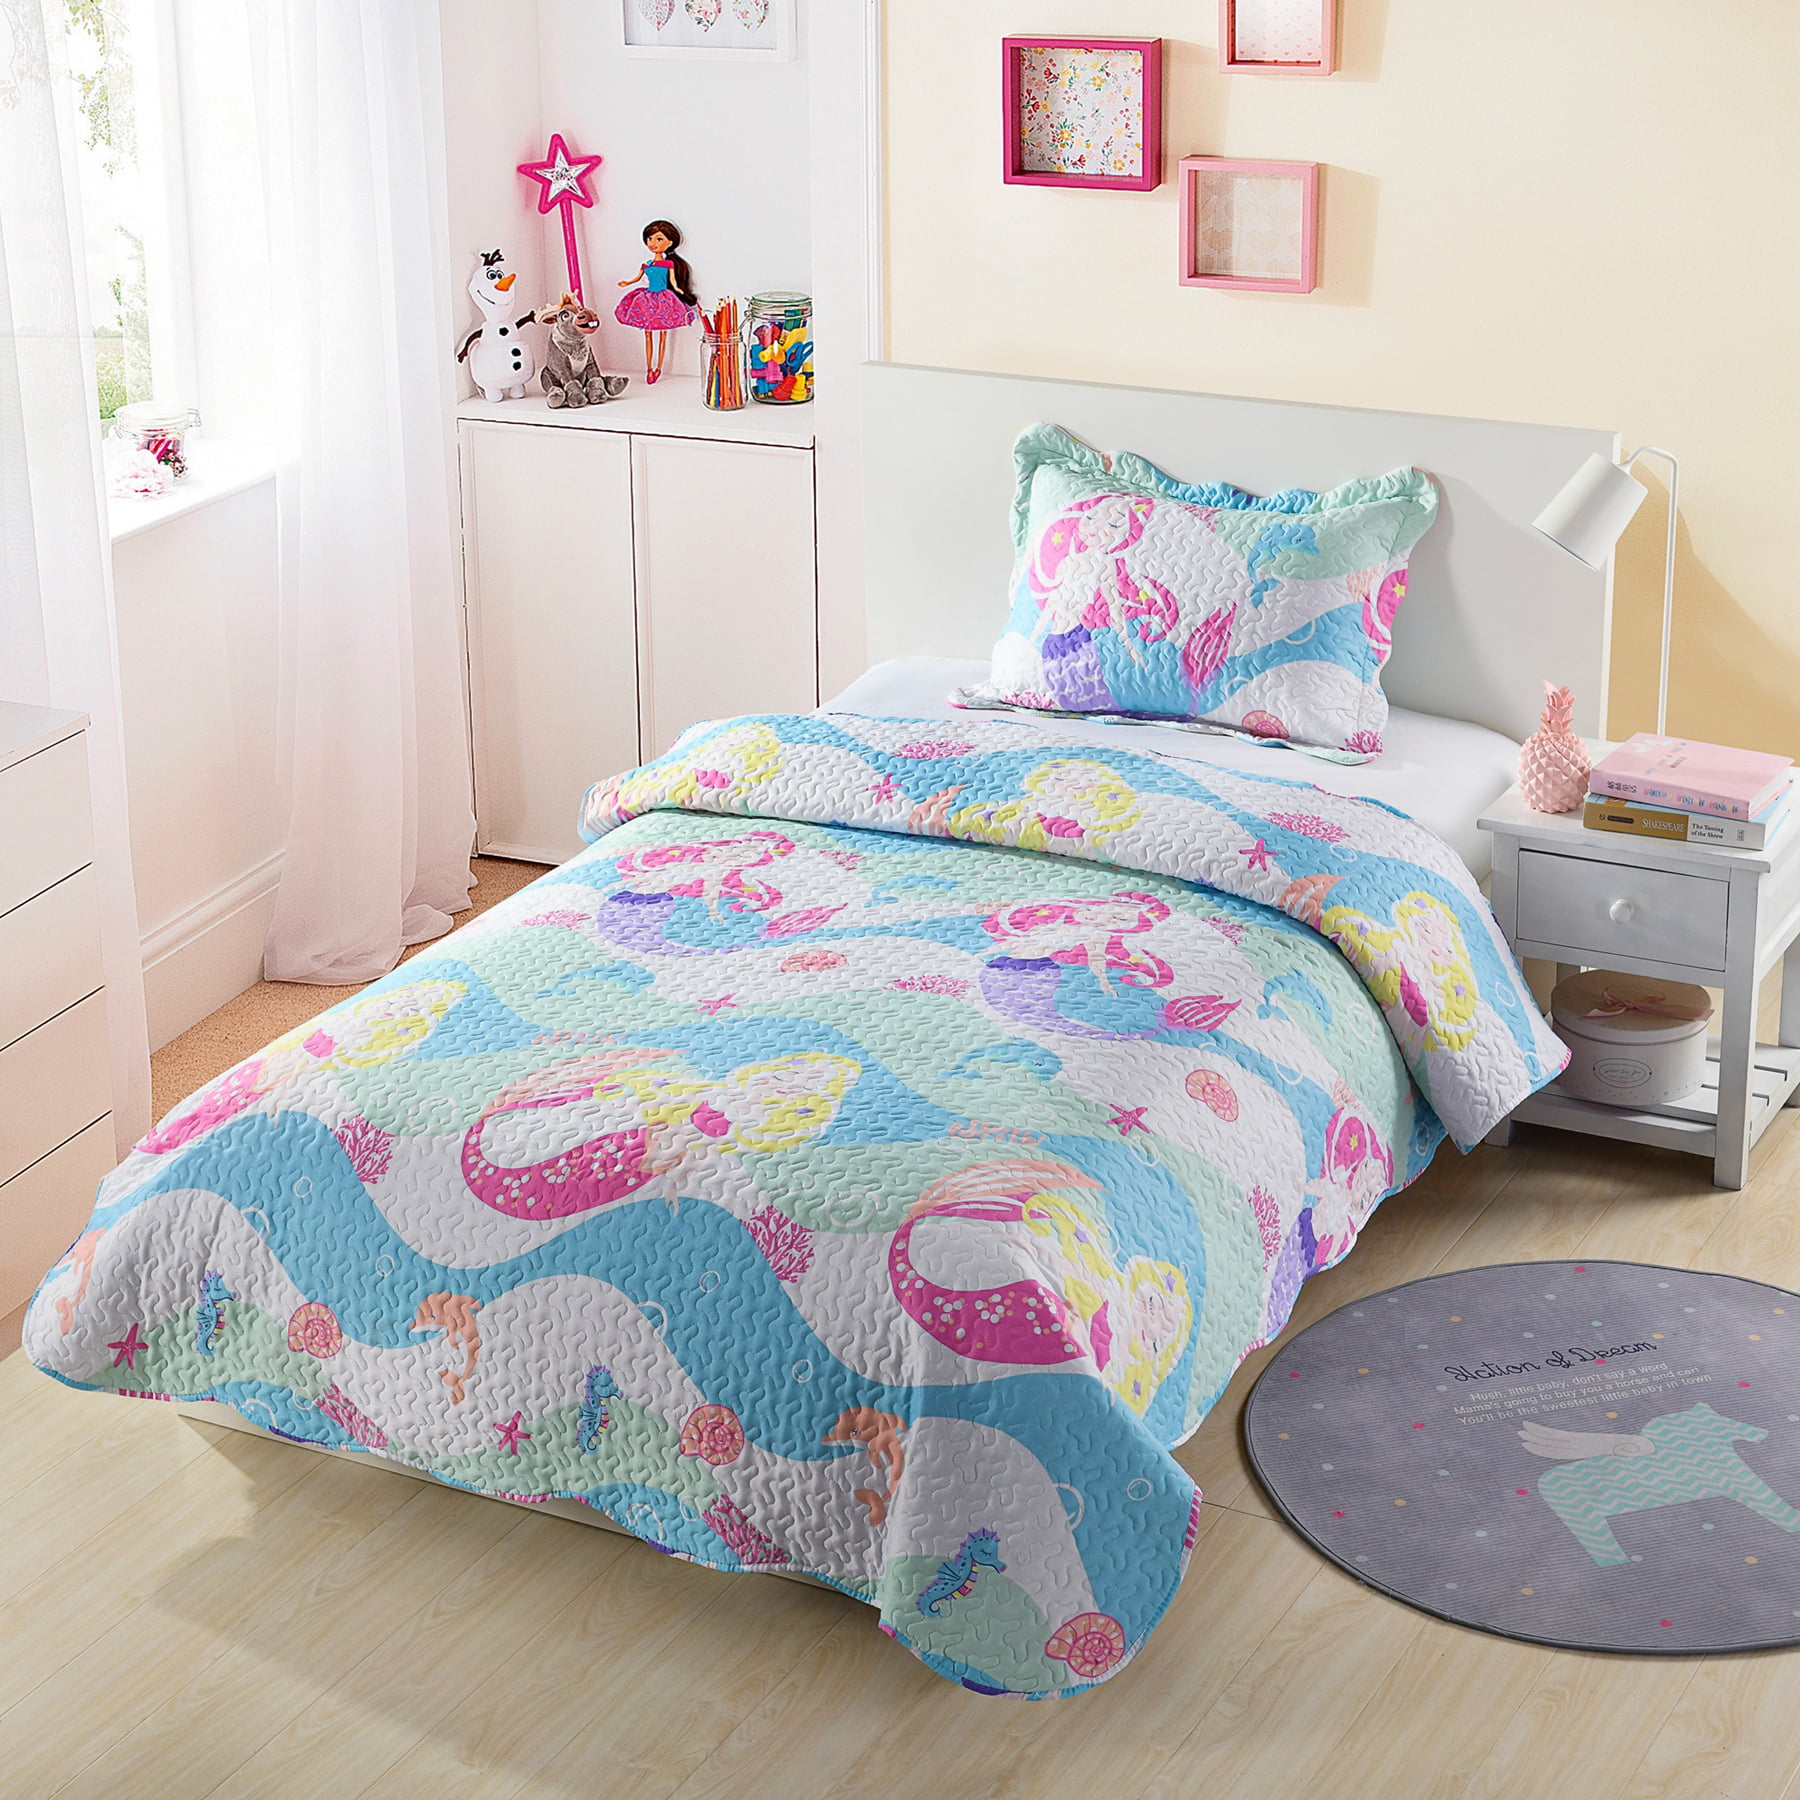 A72 Butterfly 2pcs Kids Quilt Bedspread Comforter Set Throw Blanket for Quilt 